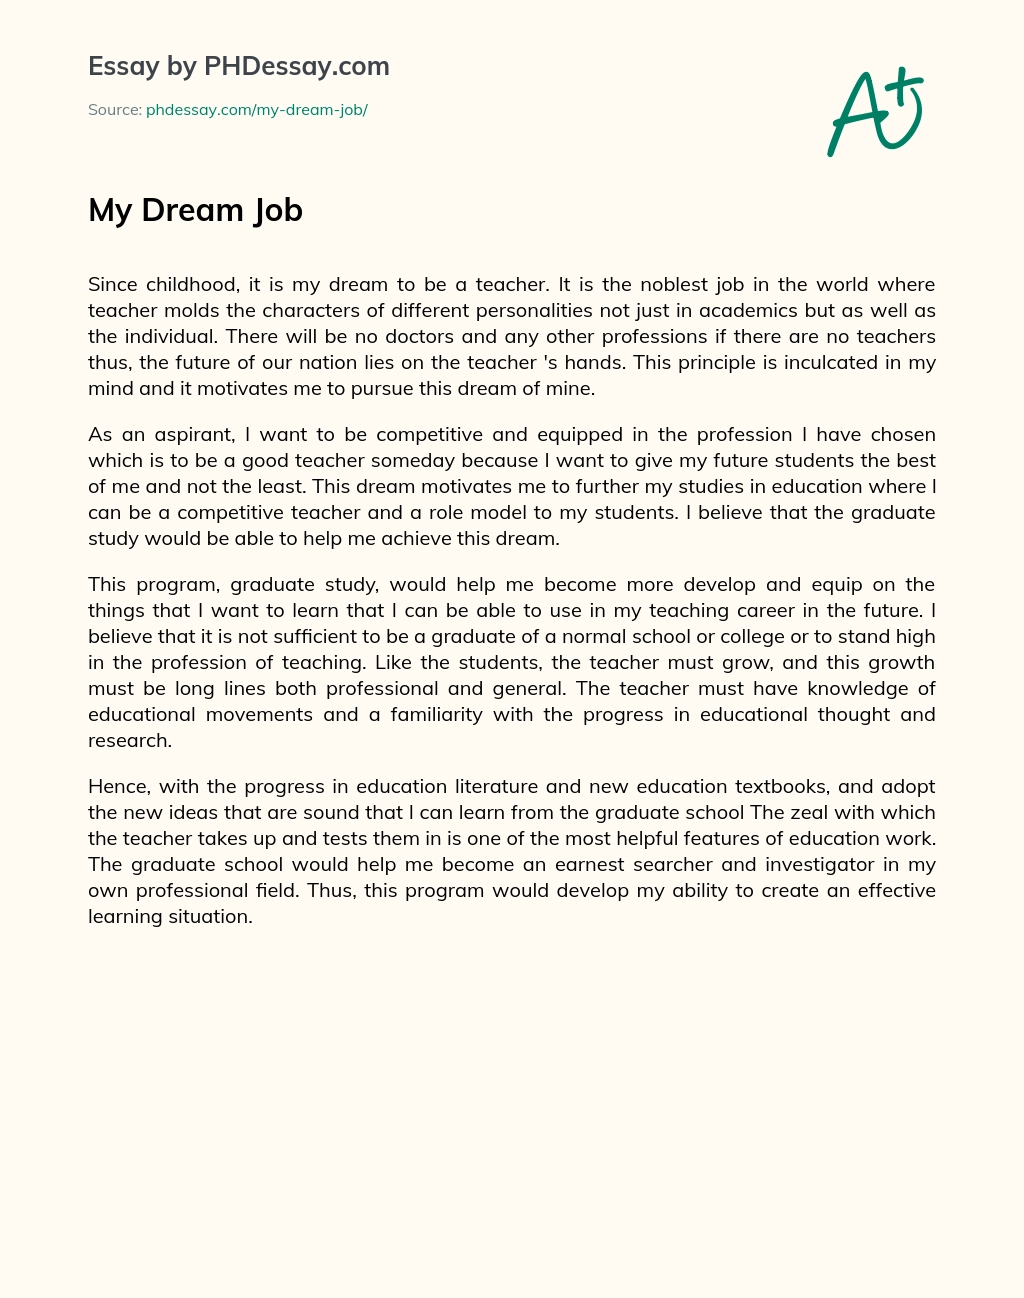 My Dream Job essay